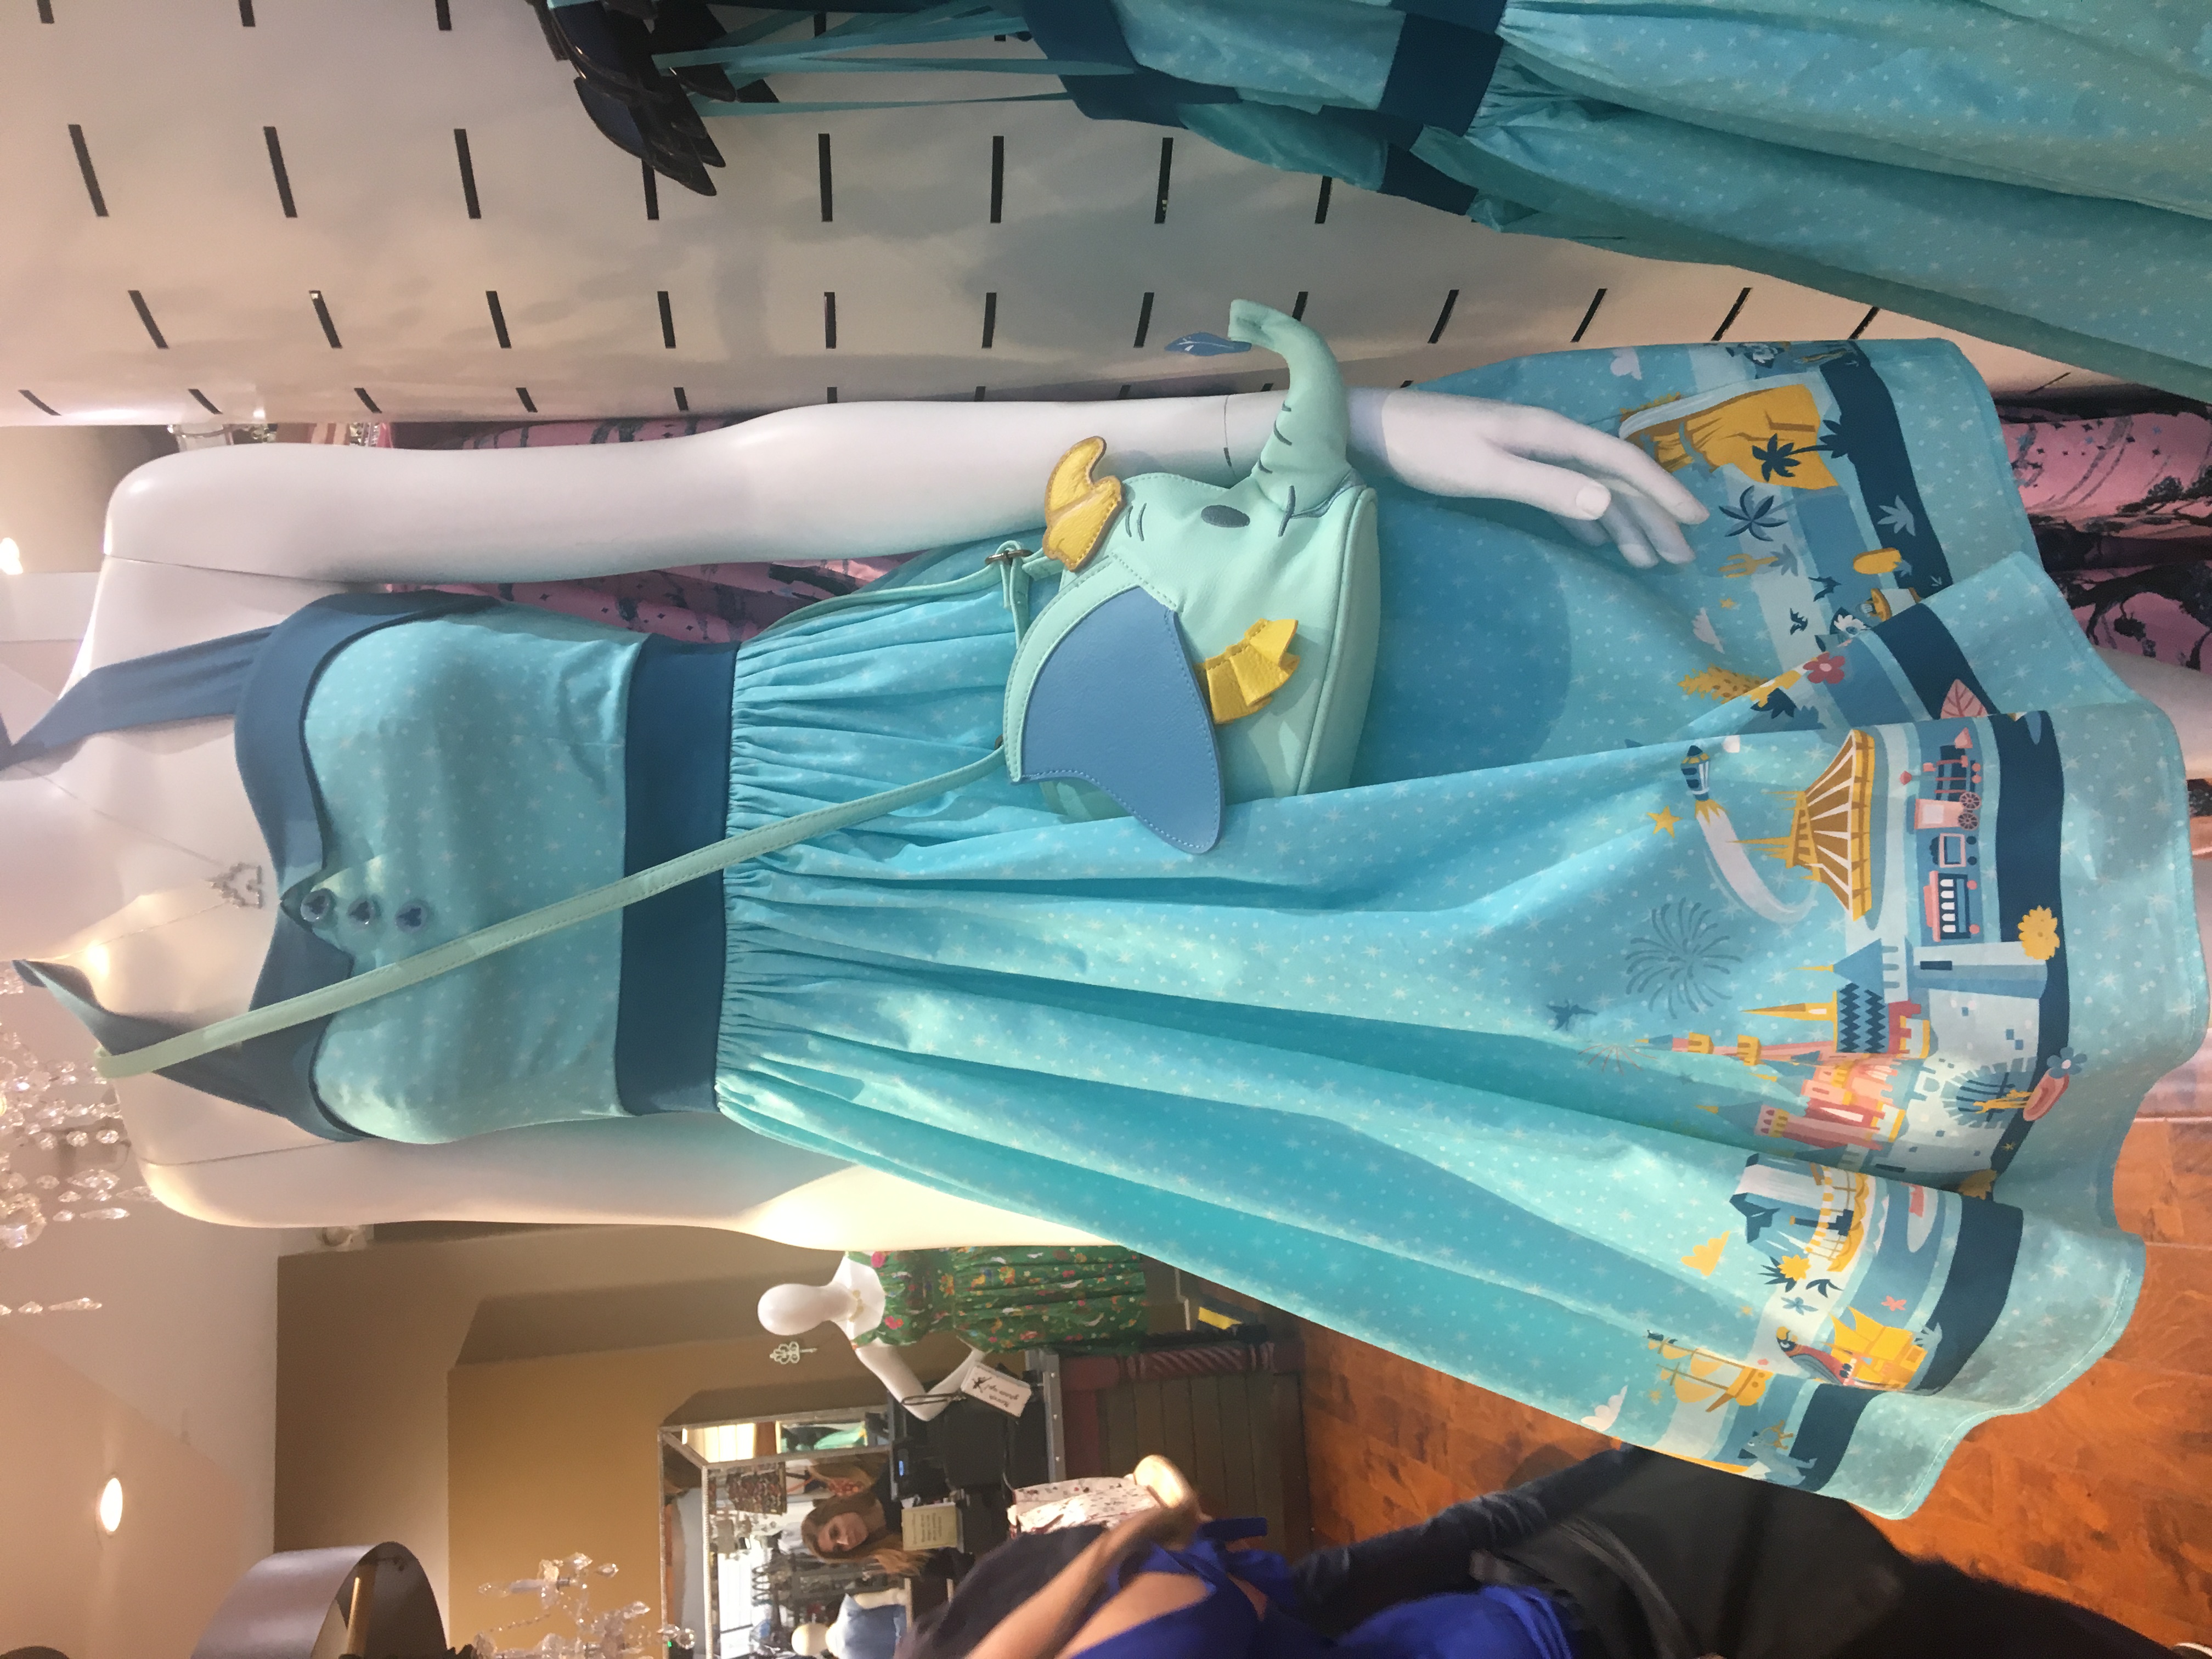 Disney Shopping: The Dress Shop